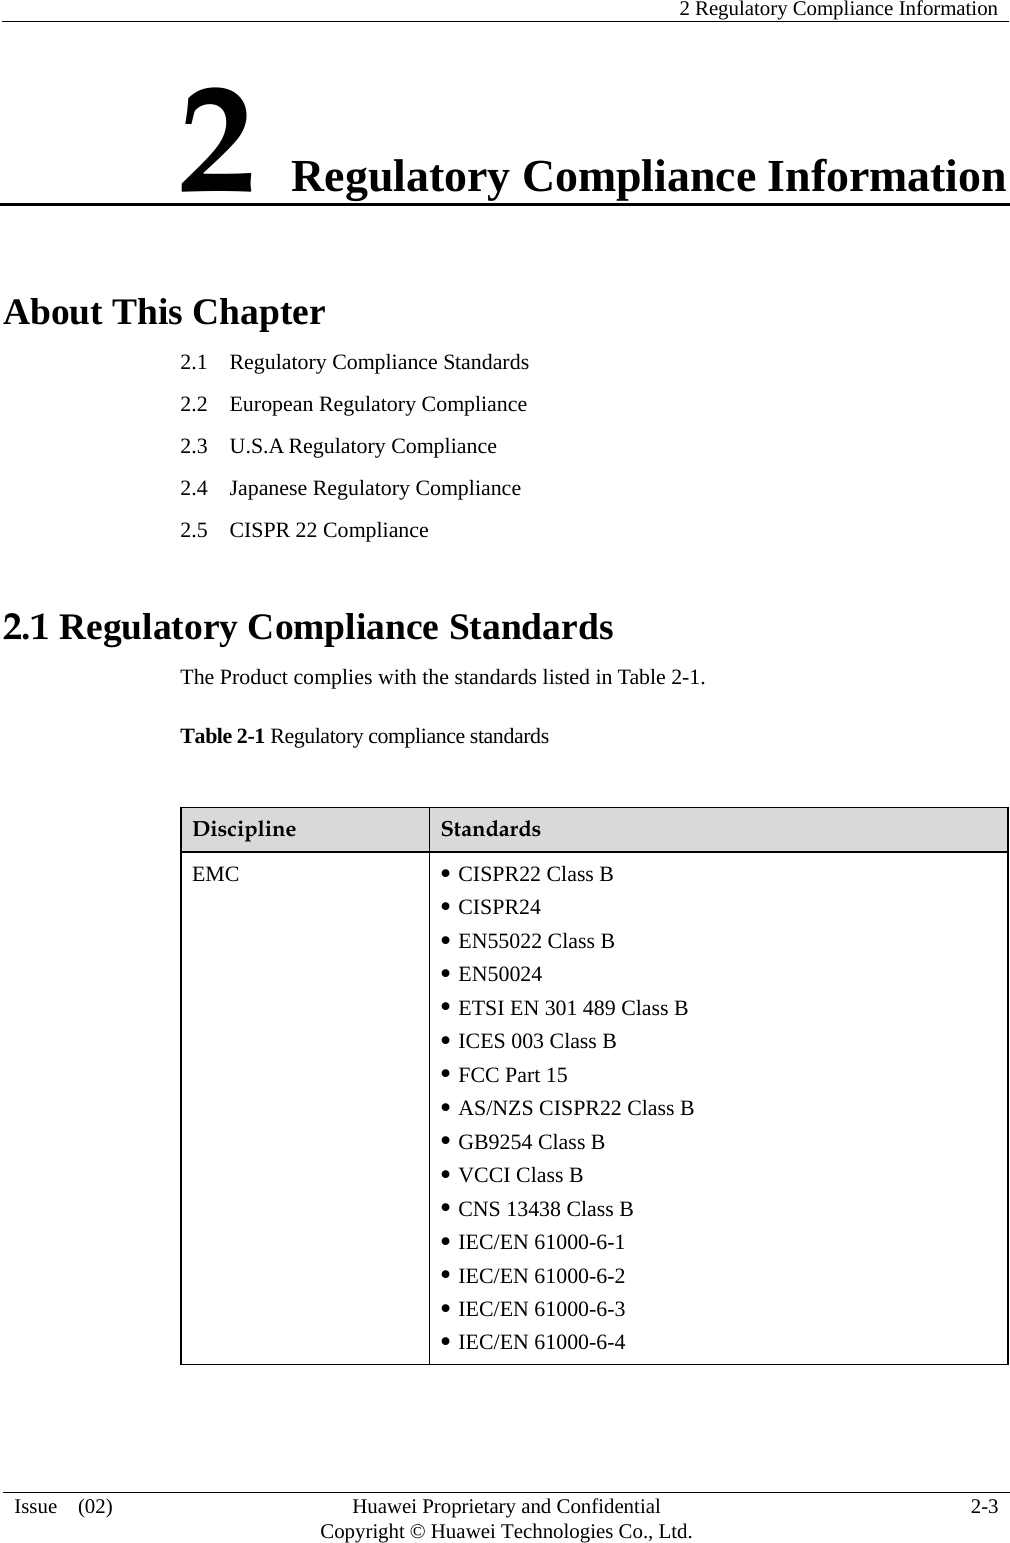    2 Regulatory Compliance Information   Issue  (02)  Huawei Proprietary and Confidential     Copyright © Huawei Technologies Co., Ltd.  2-3  2 Regulatory Compliance Information About This Chapter 2.1    Regulatory Compliance Standards 2.2  European Regulatory Compliance 2.3  U.S.A Regulatory Compliance 2.4  Japanese Regulatory Compliance 2.5    CISPR 22 Compliance 2.1 Regulatory Compliance Standards The Product complies with the standards listed in Table 2-1. Table 2-1 Regulatory compliance standards  Discipline  Standards EMC   CISPR22 Class B  CISPR24  EN55022 Class B  EN50024  ETSI EN 301 489 Class B  ICES 003 Class B  FCC Part 15  AS/NZS CISPR22 Class B  GB9254 Class B  VCCI Class B  CNS 13438 Class B  IEC/EN 61000-6-1  IEC/EN 61000-6-2  IEC/EN 61000-6-3  IEC/EN 61000-6-4 